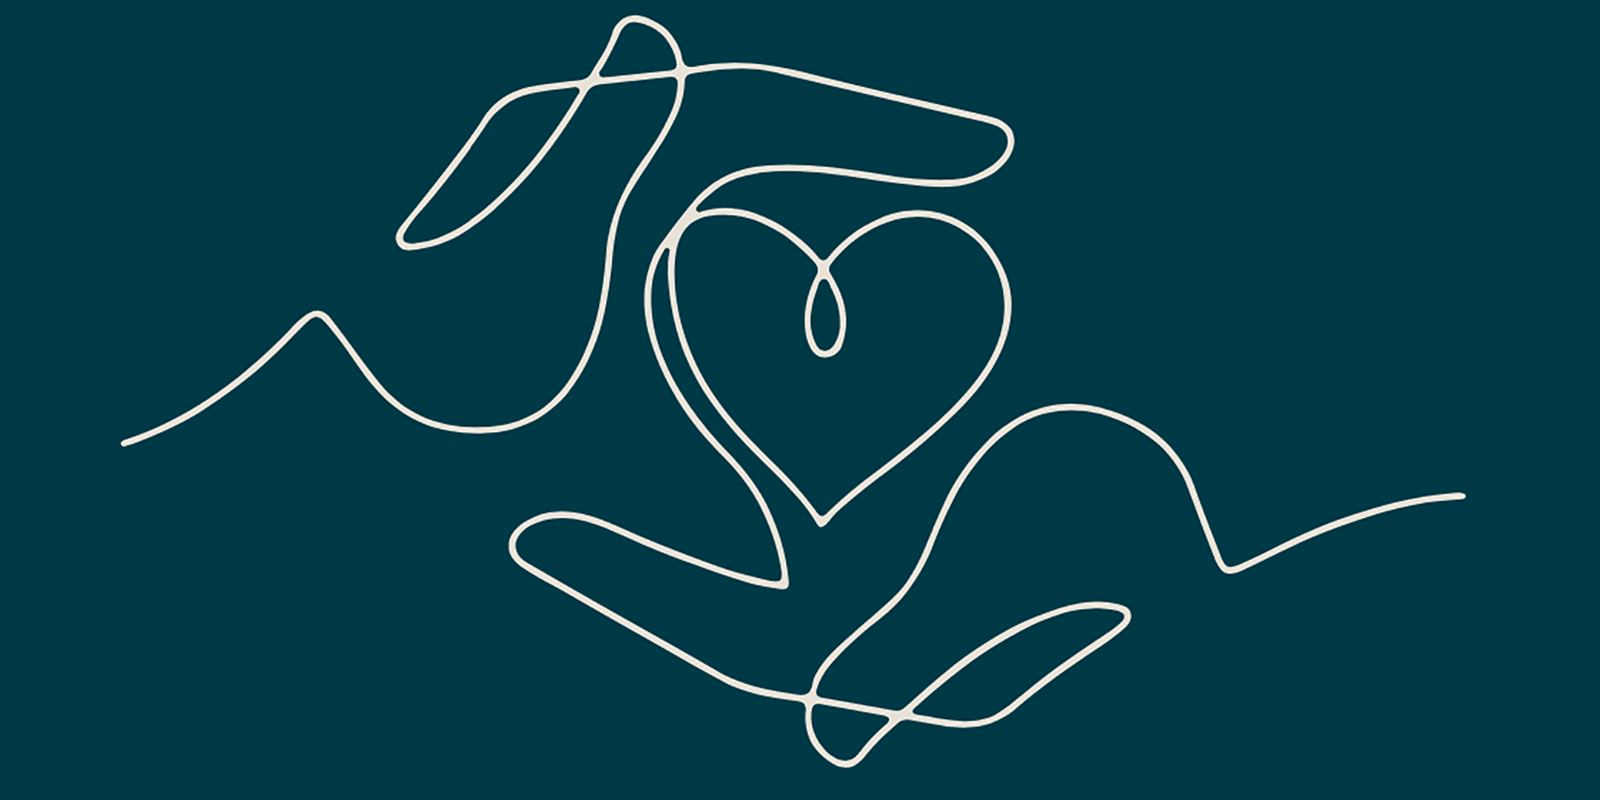 Heart in hands illustration